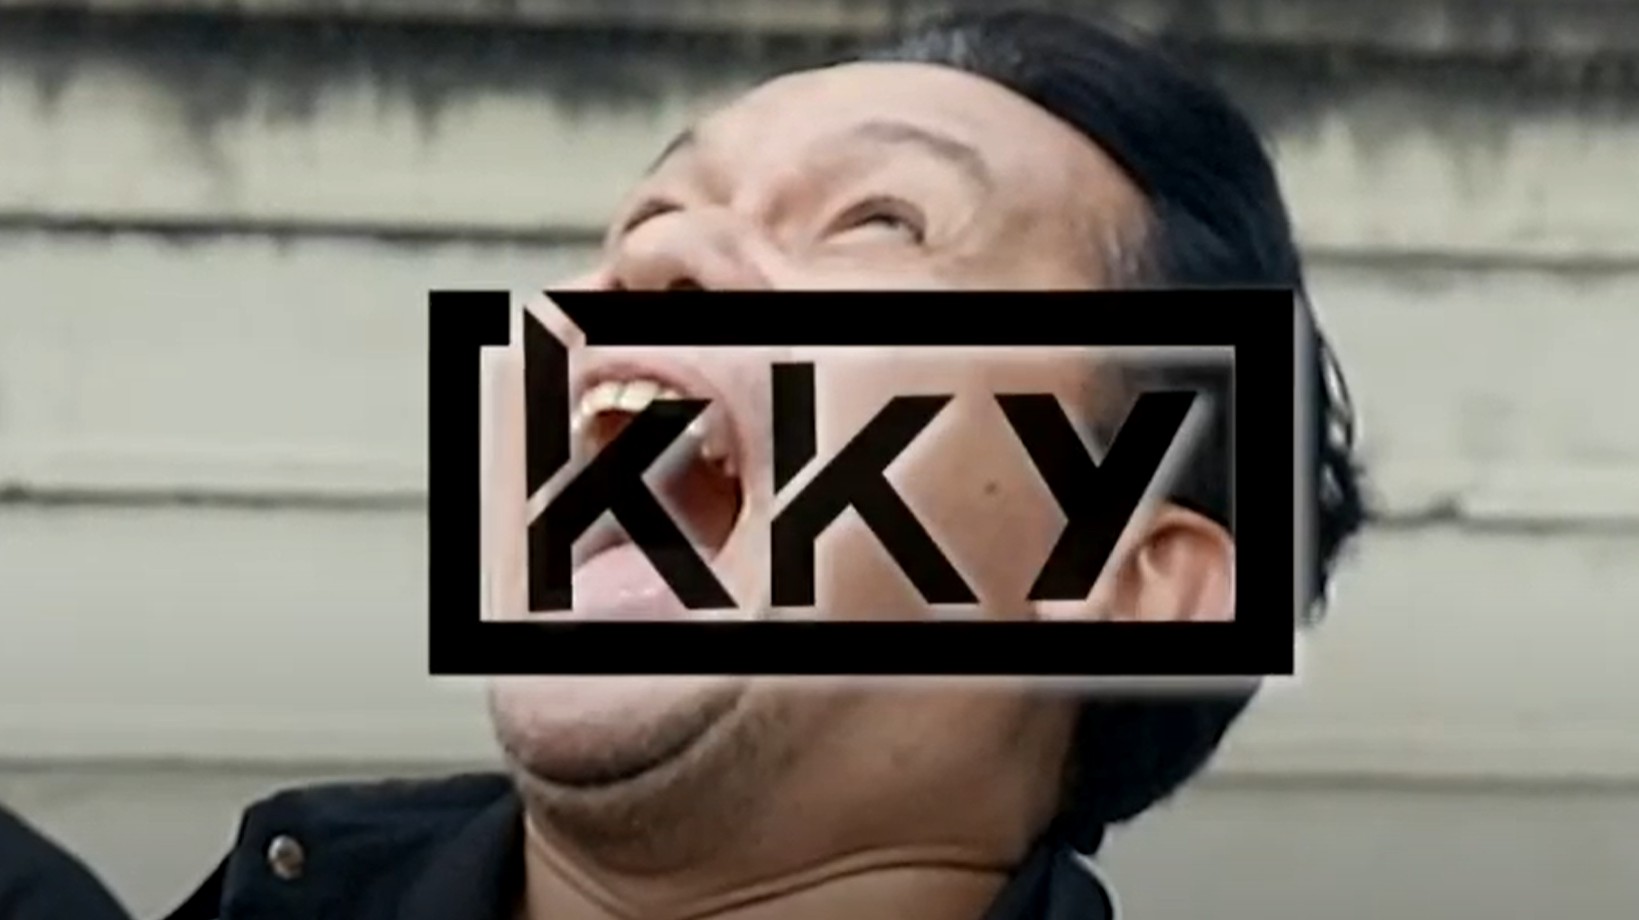 kky - viral clip 1